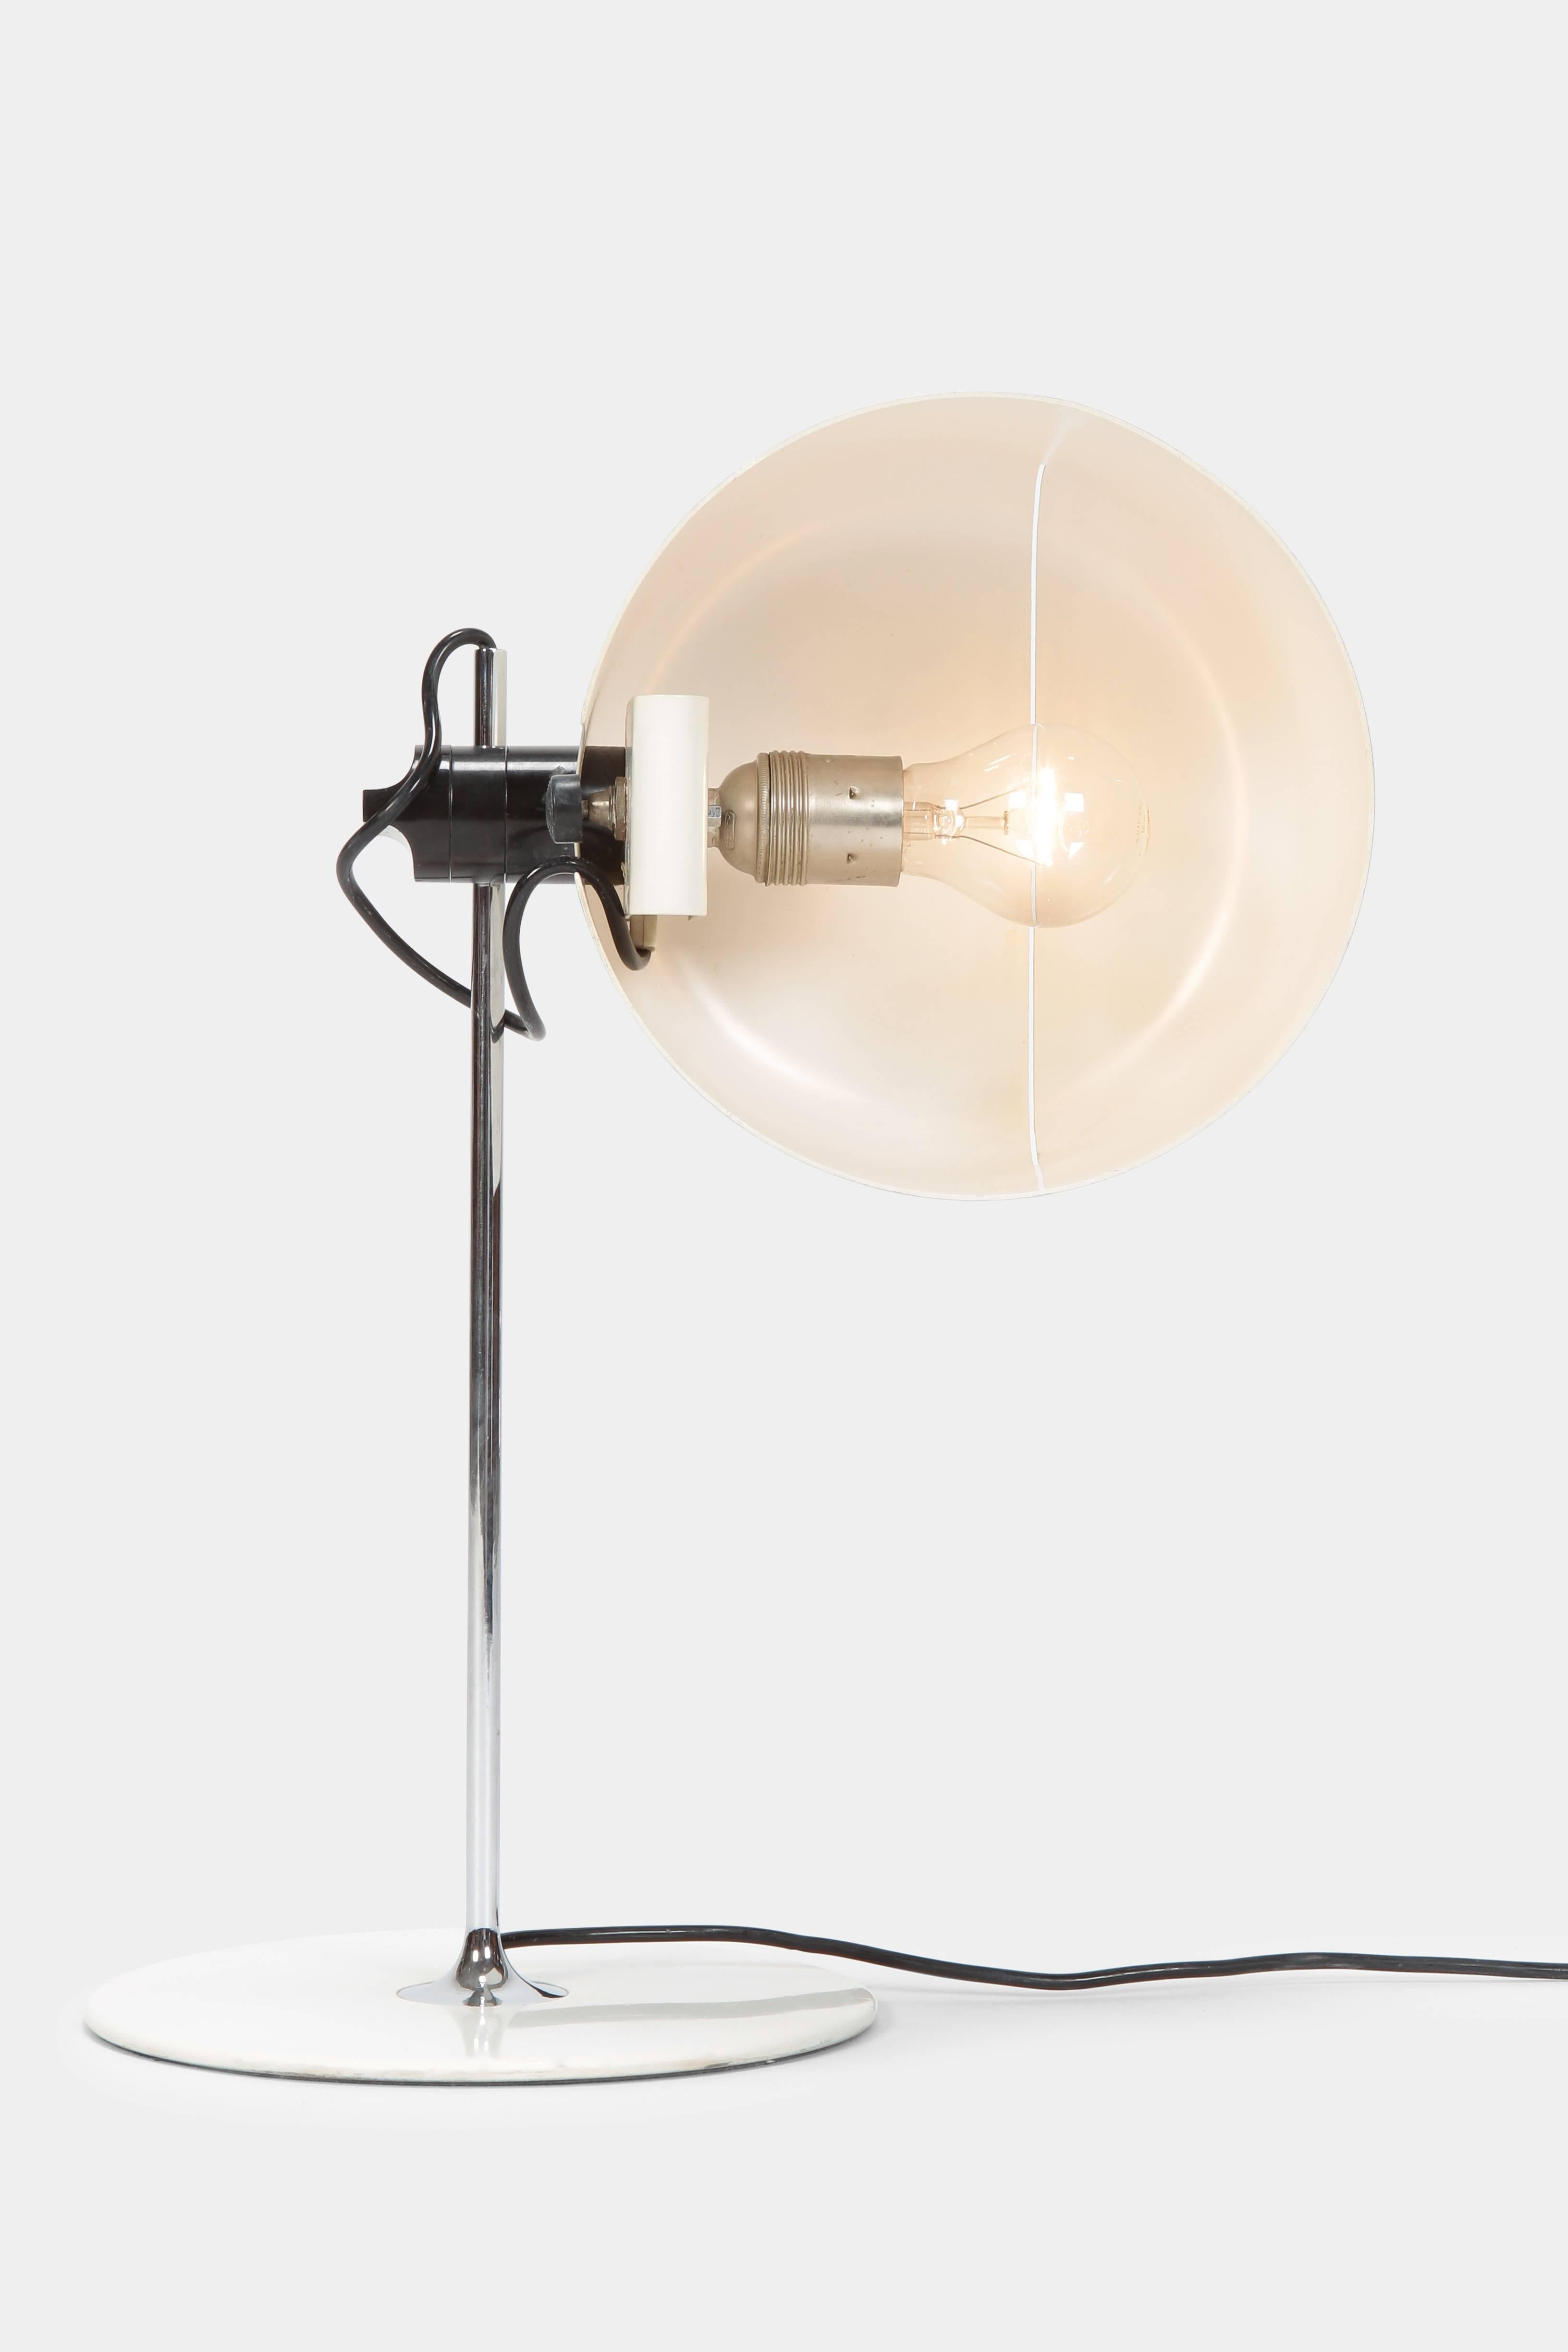 Joe Colombo “Coupe” Table Lamp O-Luce, 1960s For Sale 1